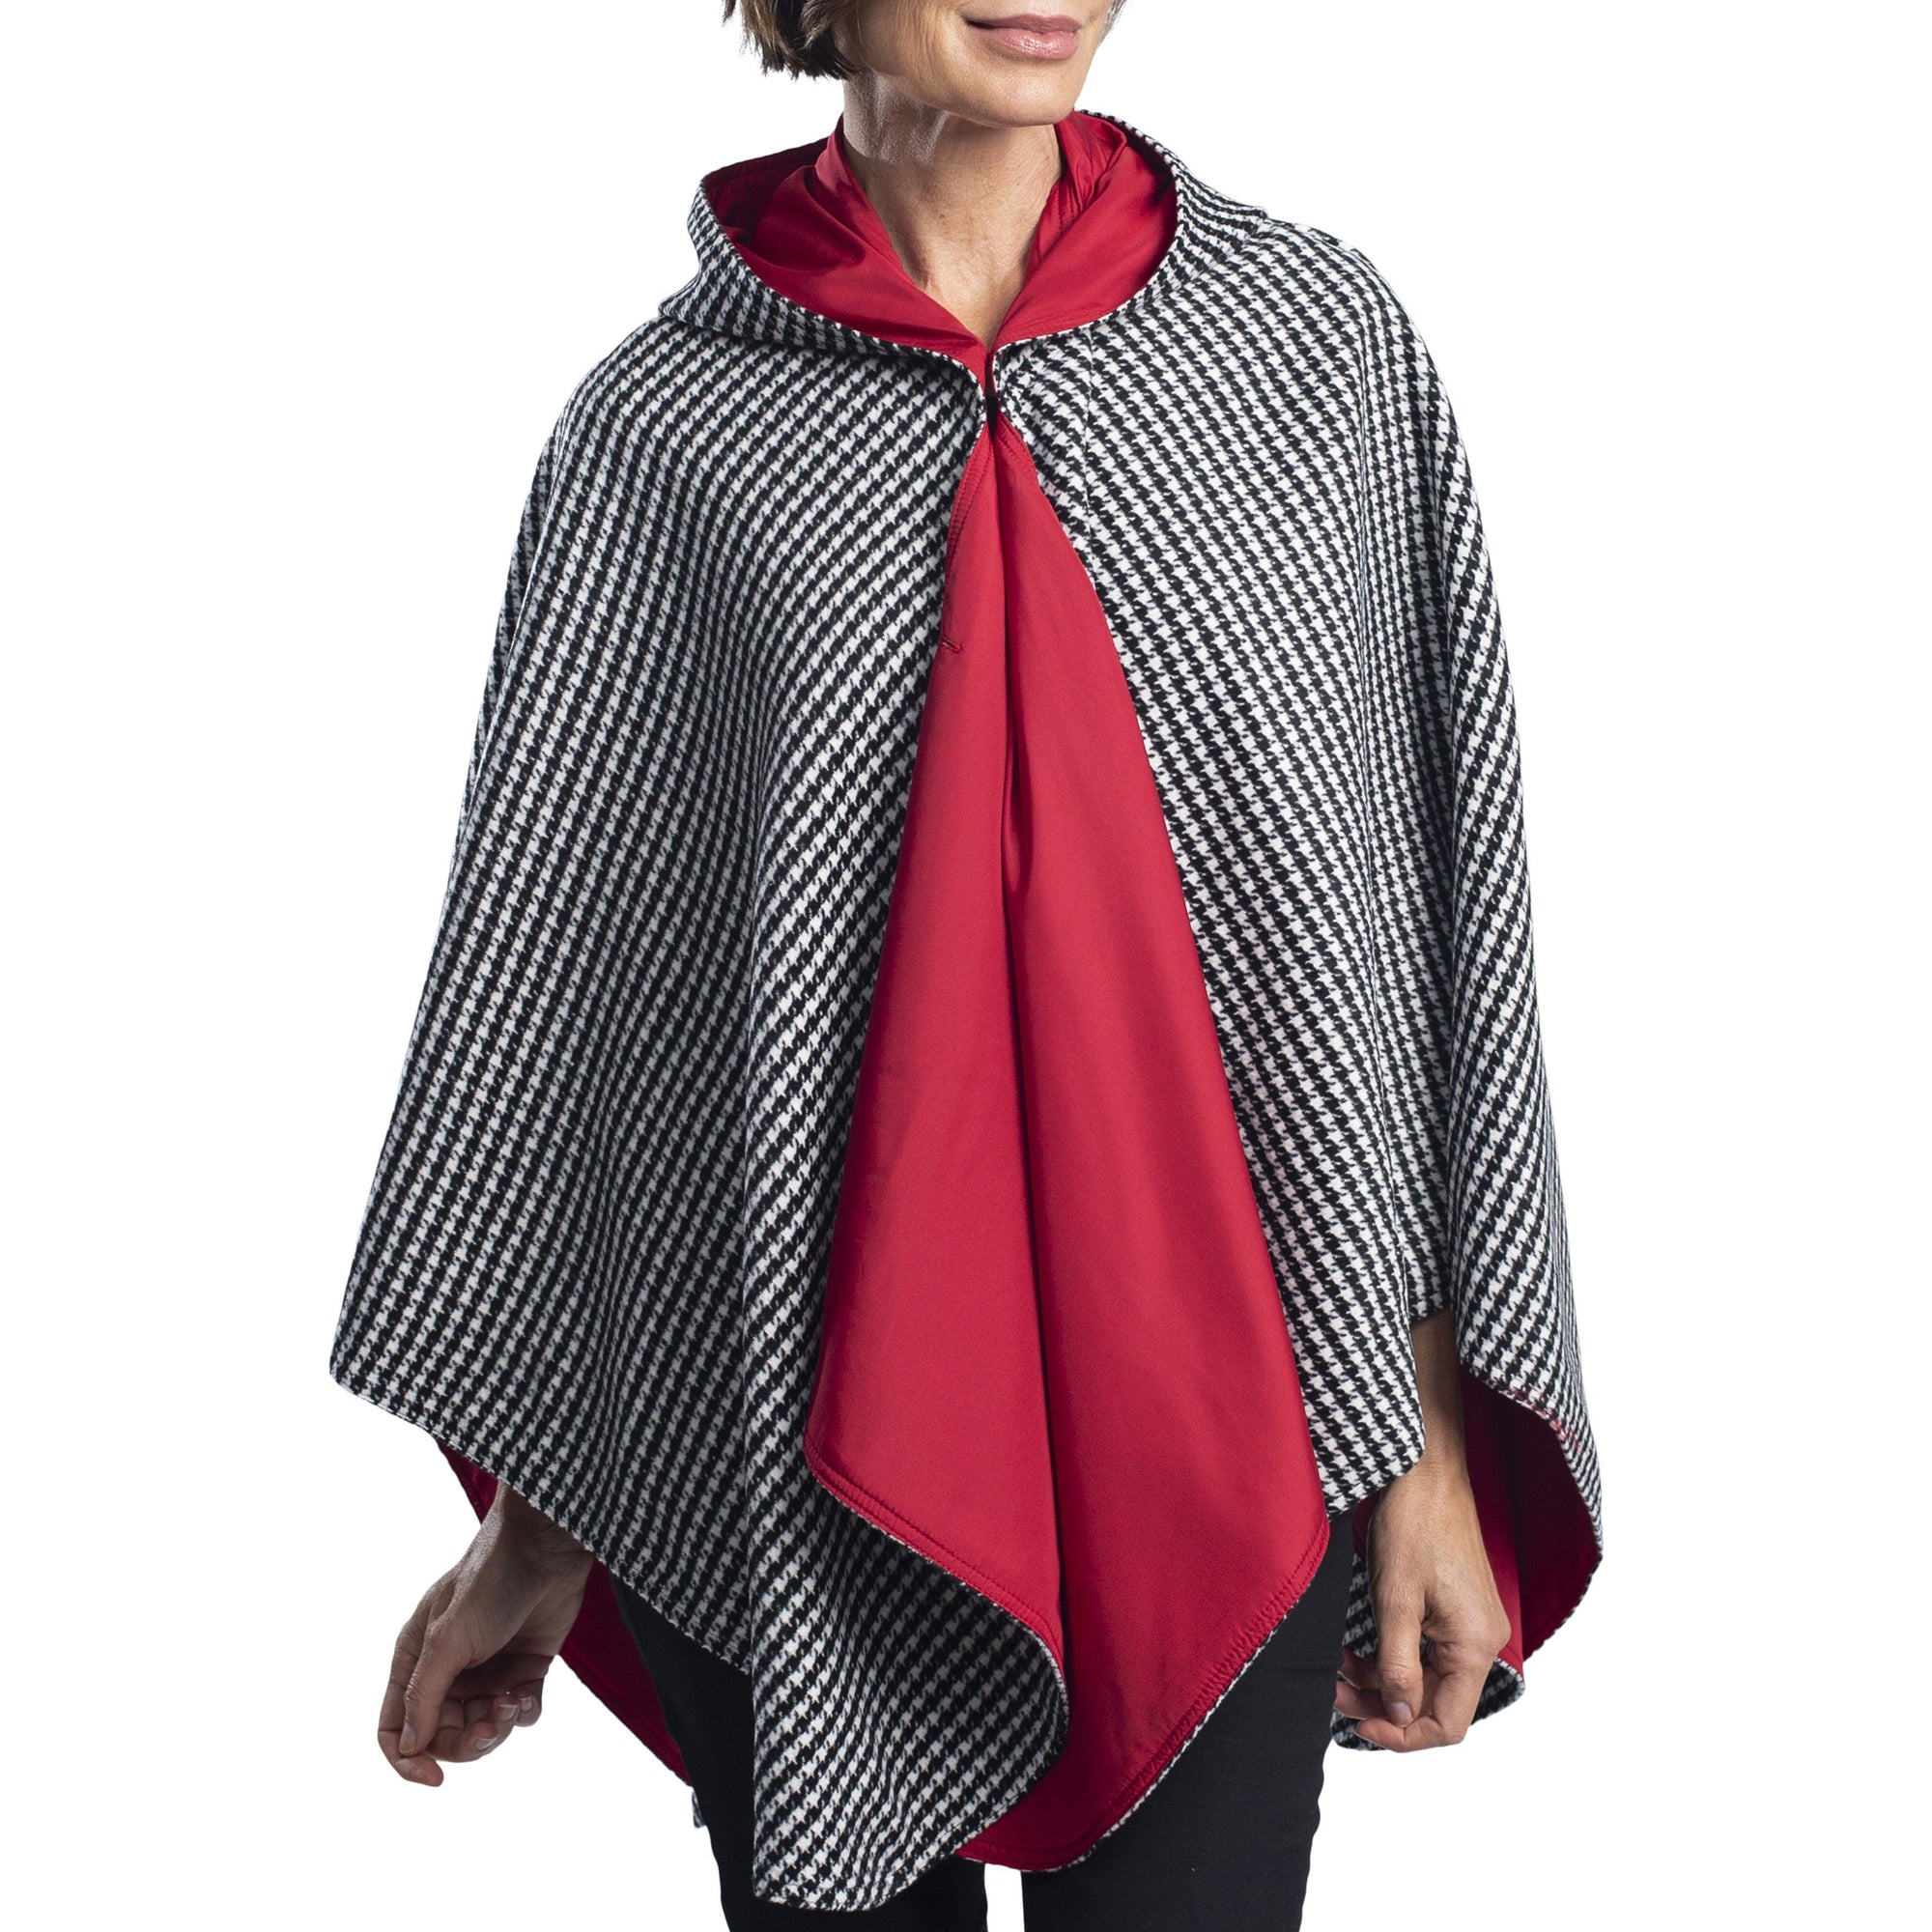 Woman wearing a WarmCaper Warm Houndstooth/Crimson Rainproof and travel cape by RainCaper